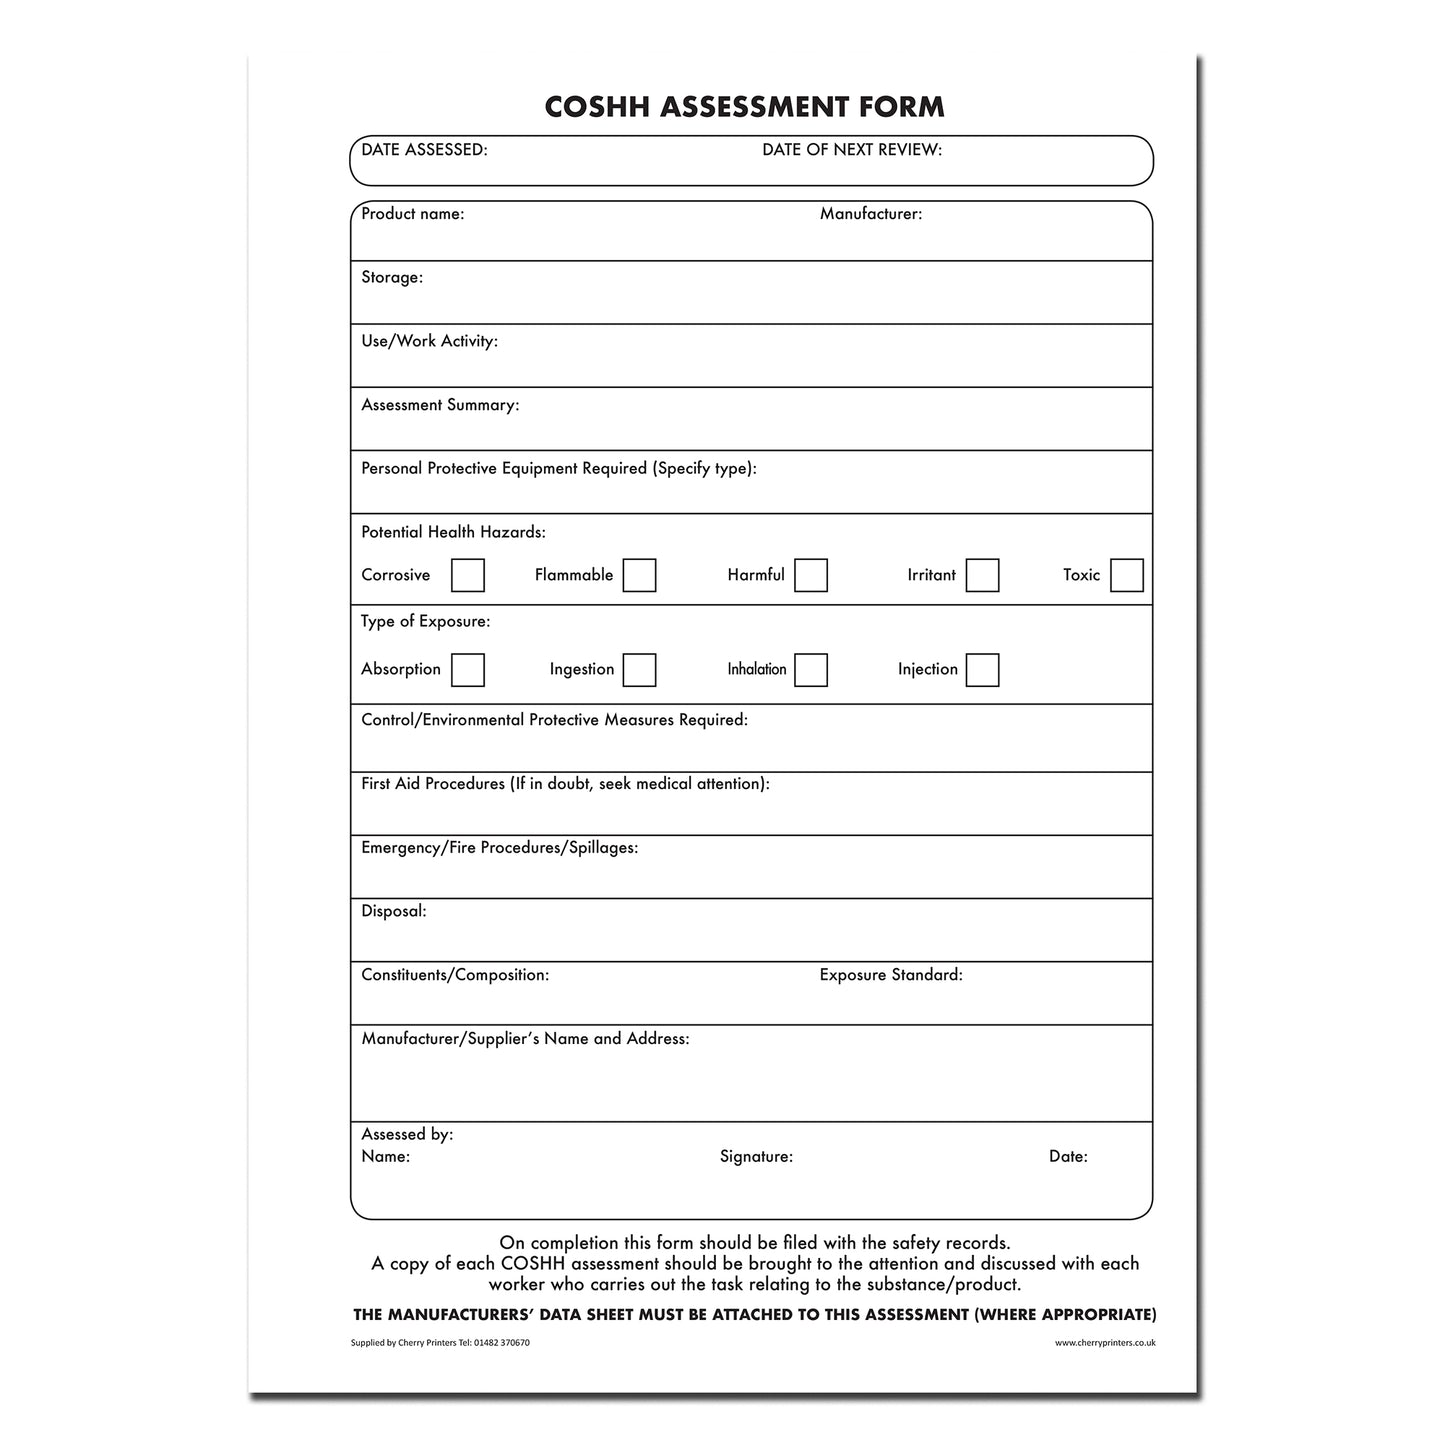 NCR COSHH Assessment Book A4 Duplicate